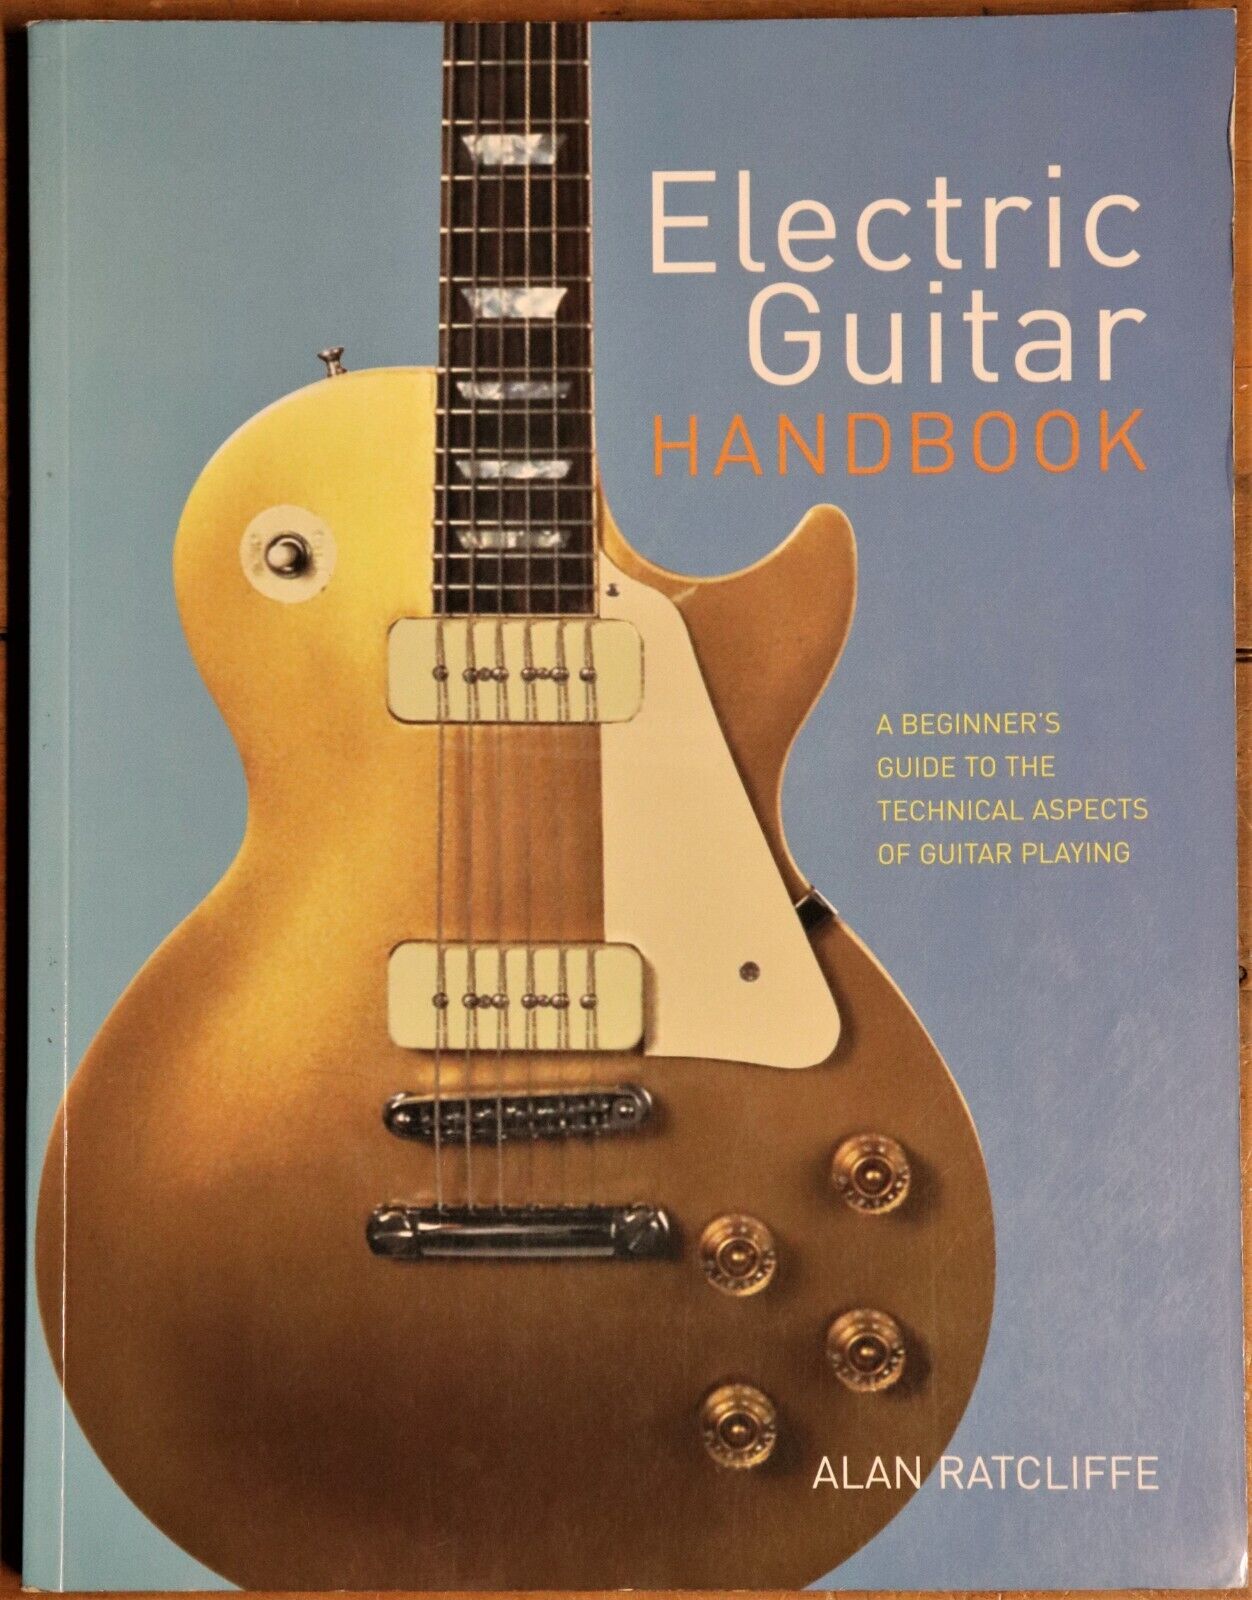 Electric Guitar Handbookby Alan Ratcliffe - 2007